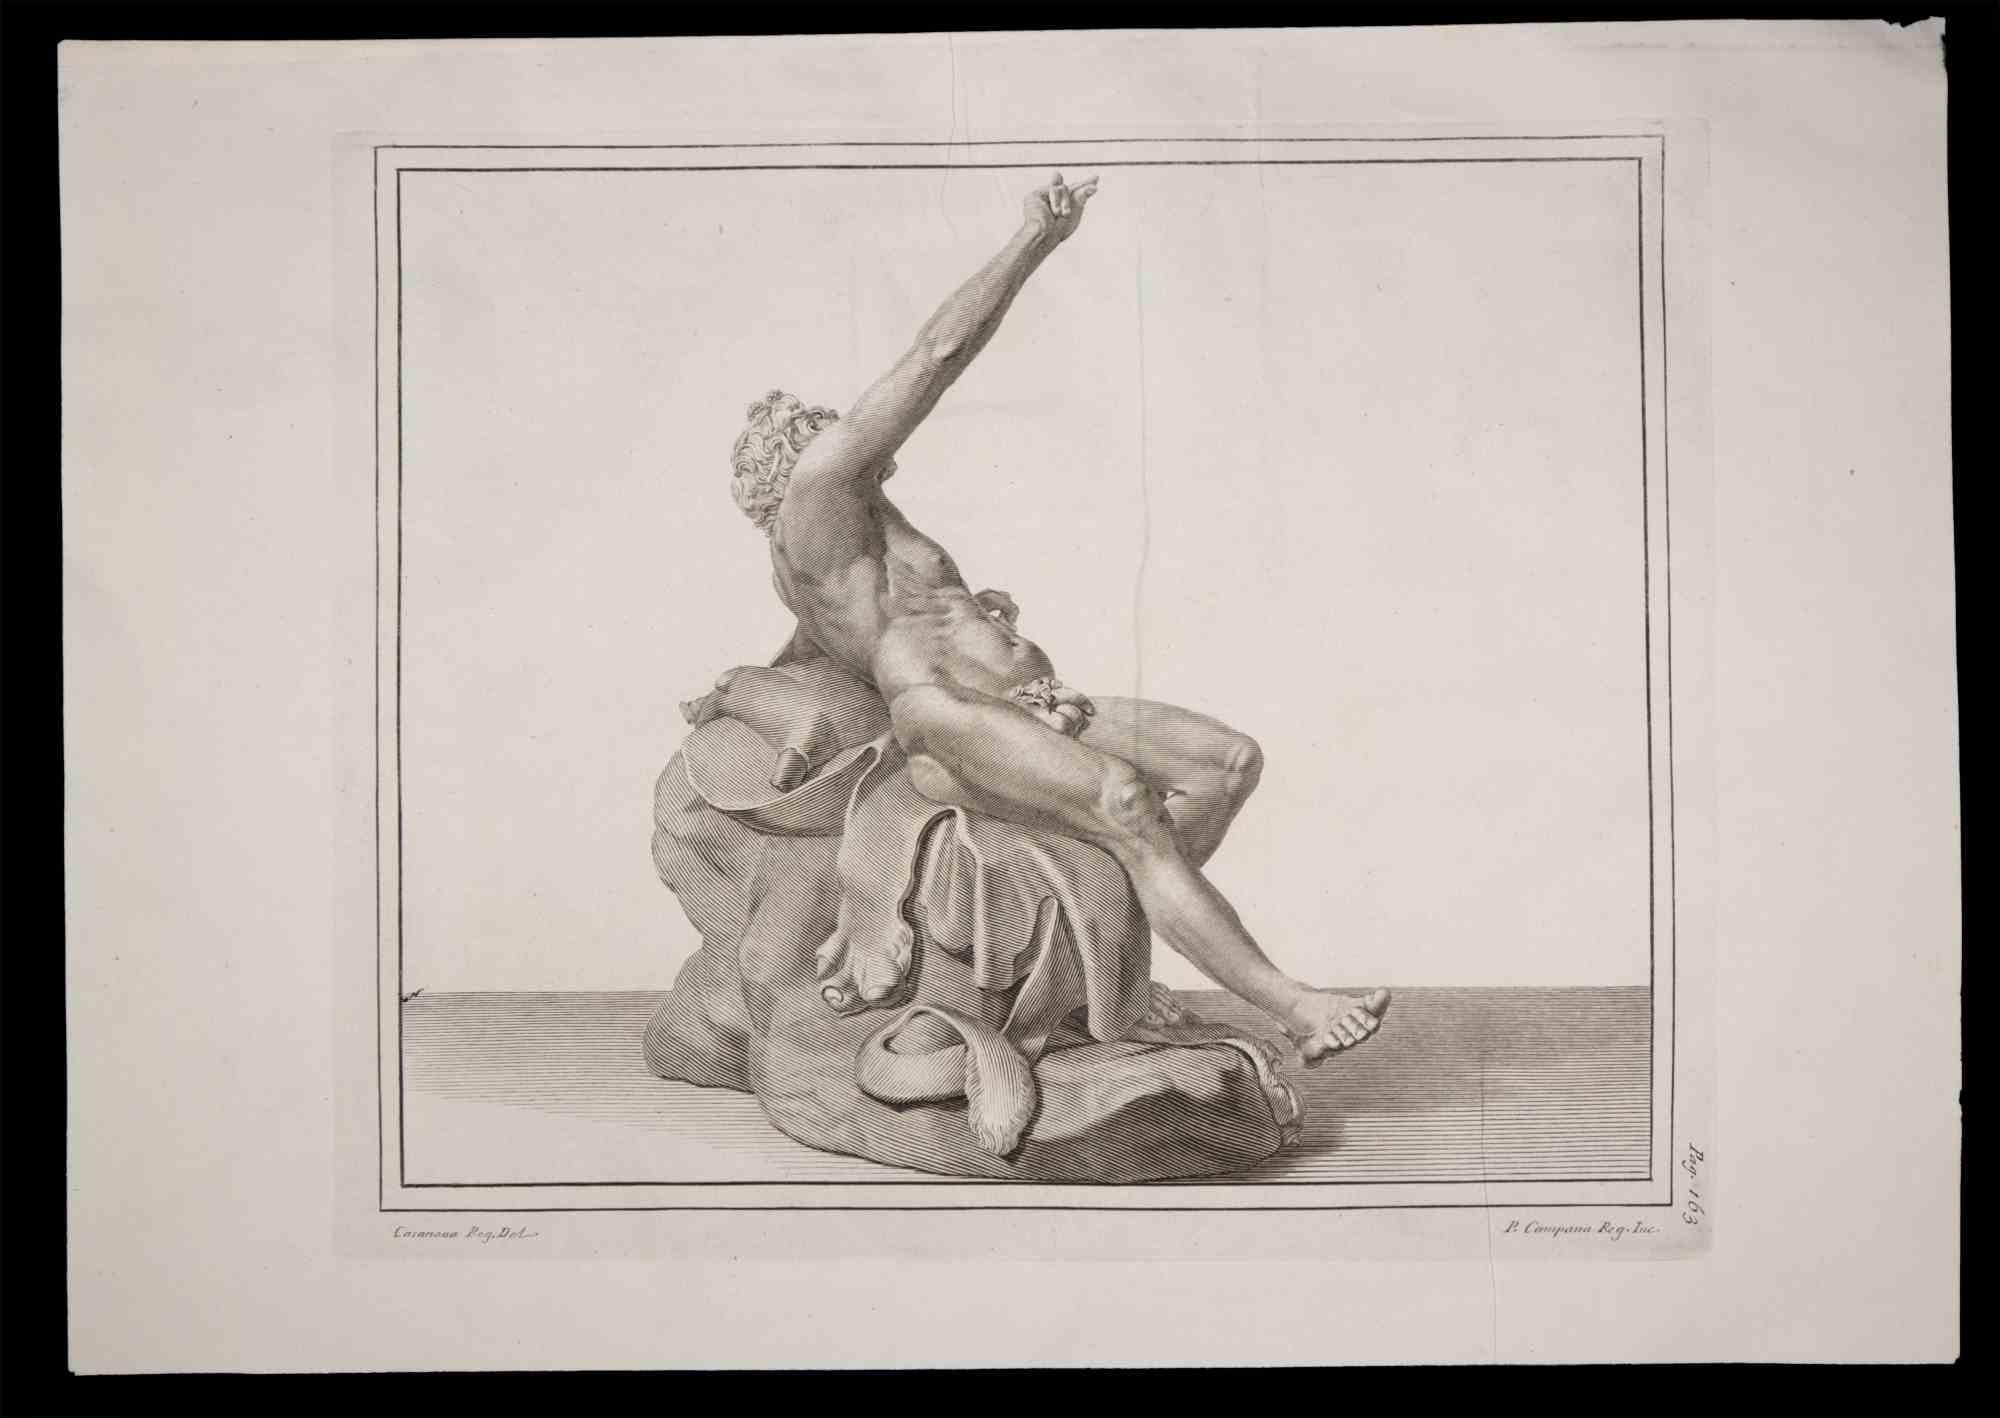 Pietro Campana Figurative Print - Hercules, Ancient Roman Statue - Etching by P. Campana - 18th century